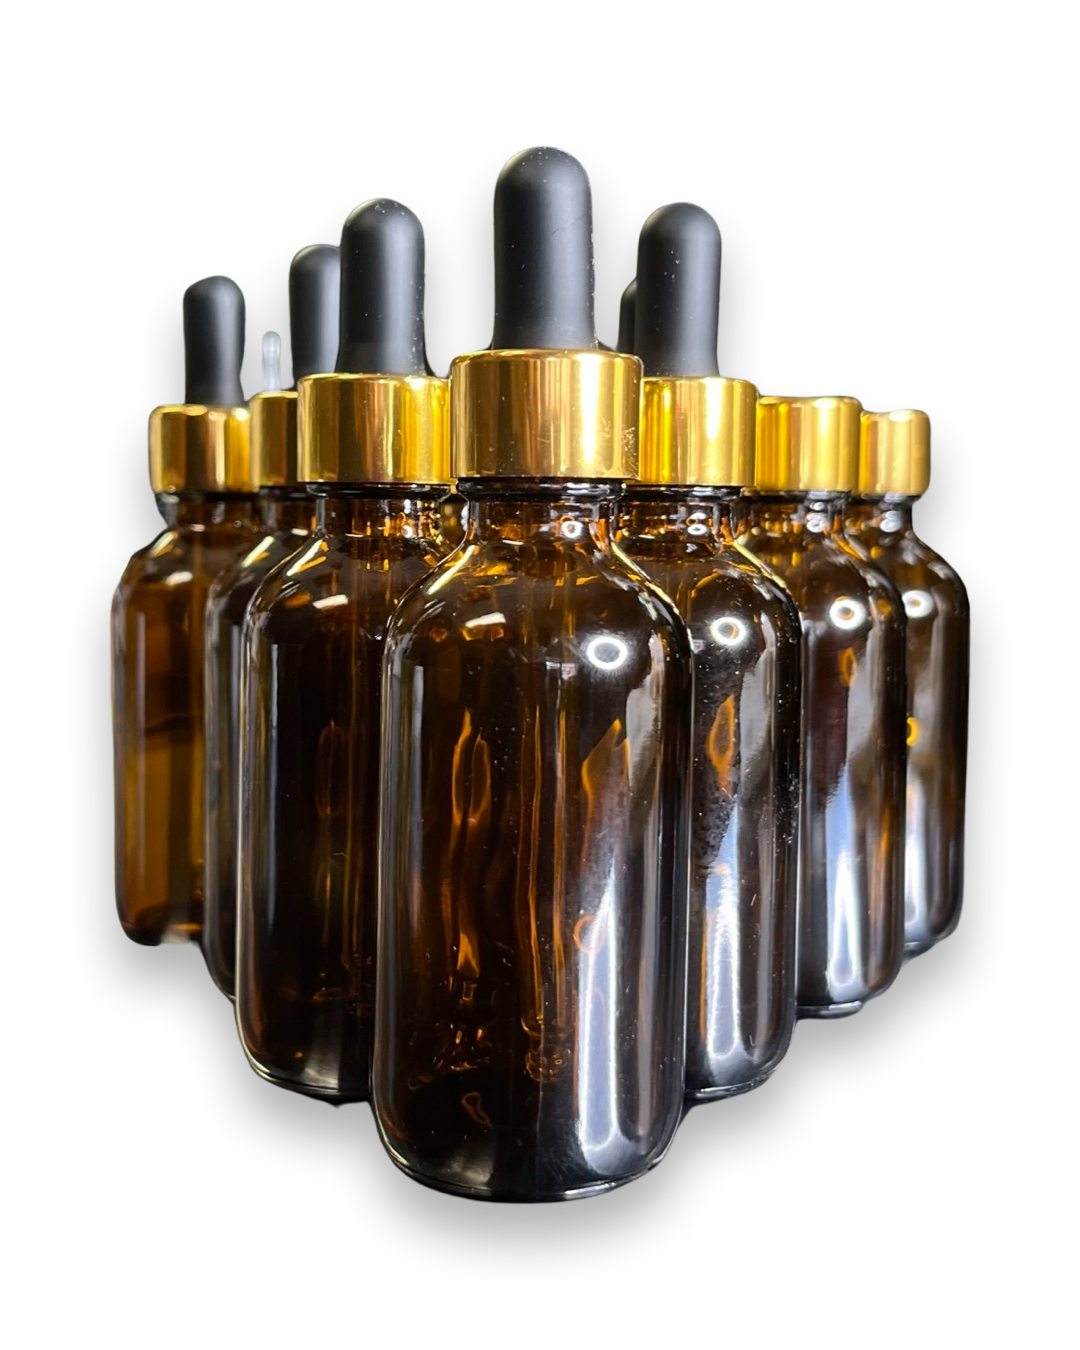 Cedarwood Beard Oil (Basic)